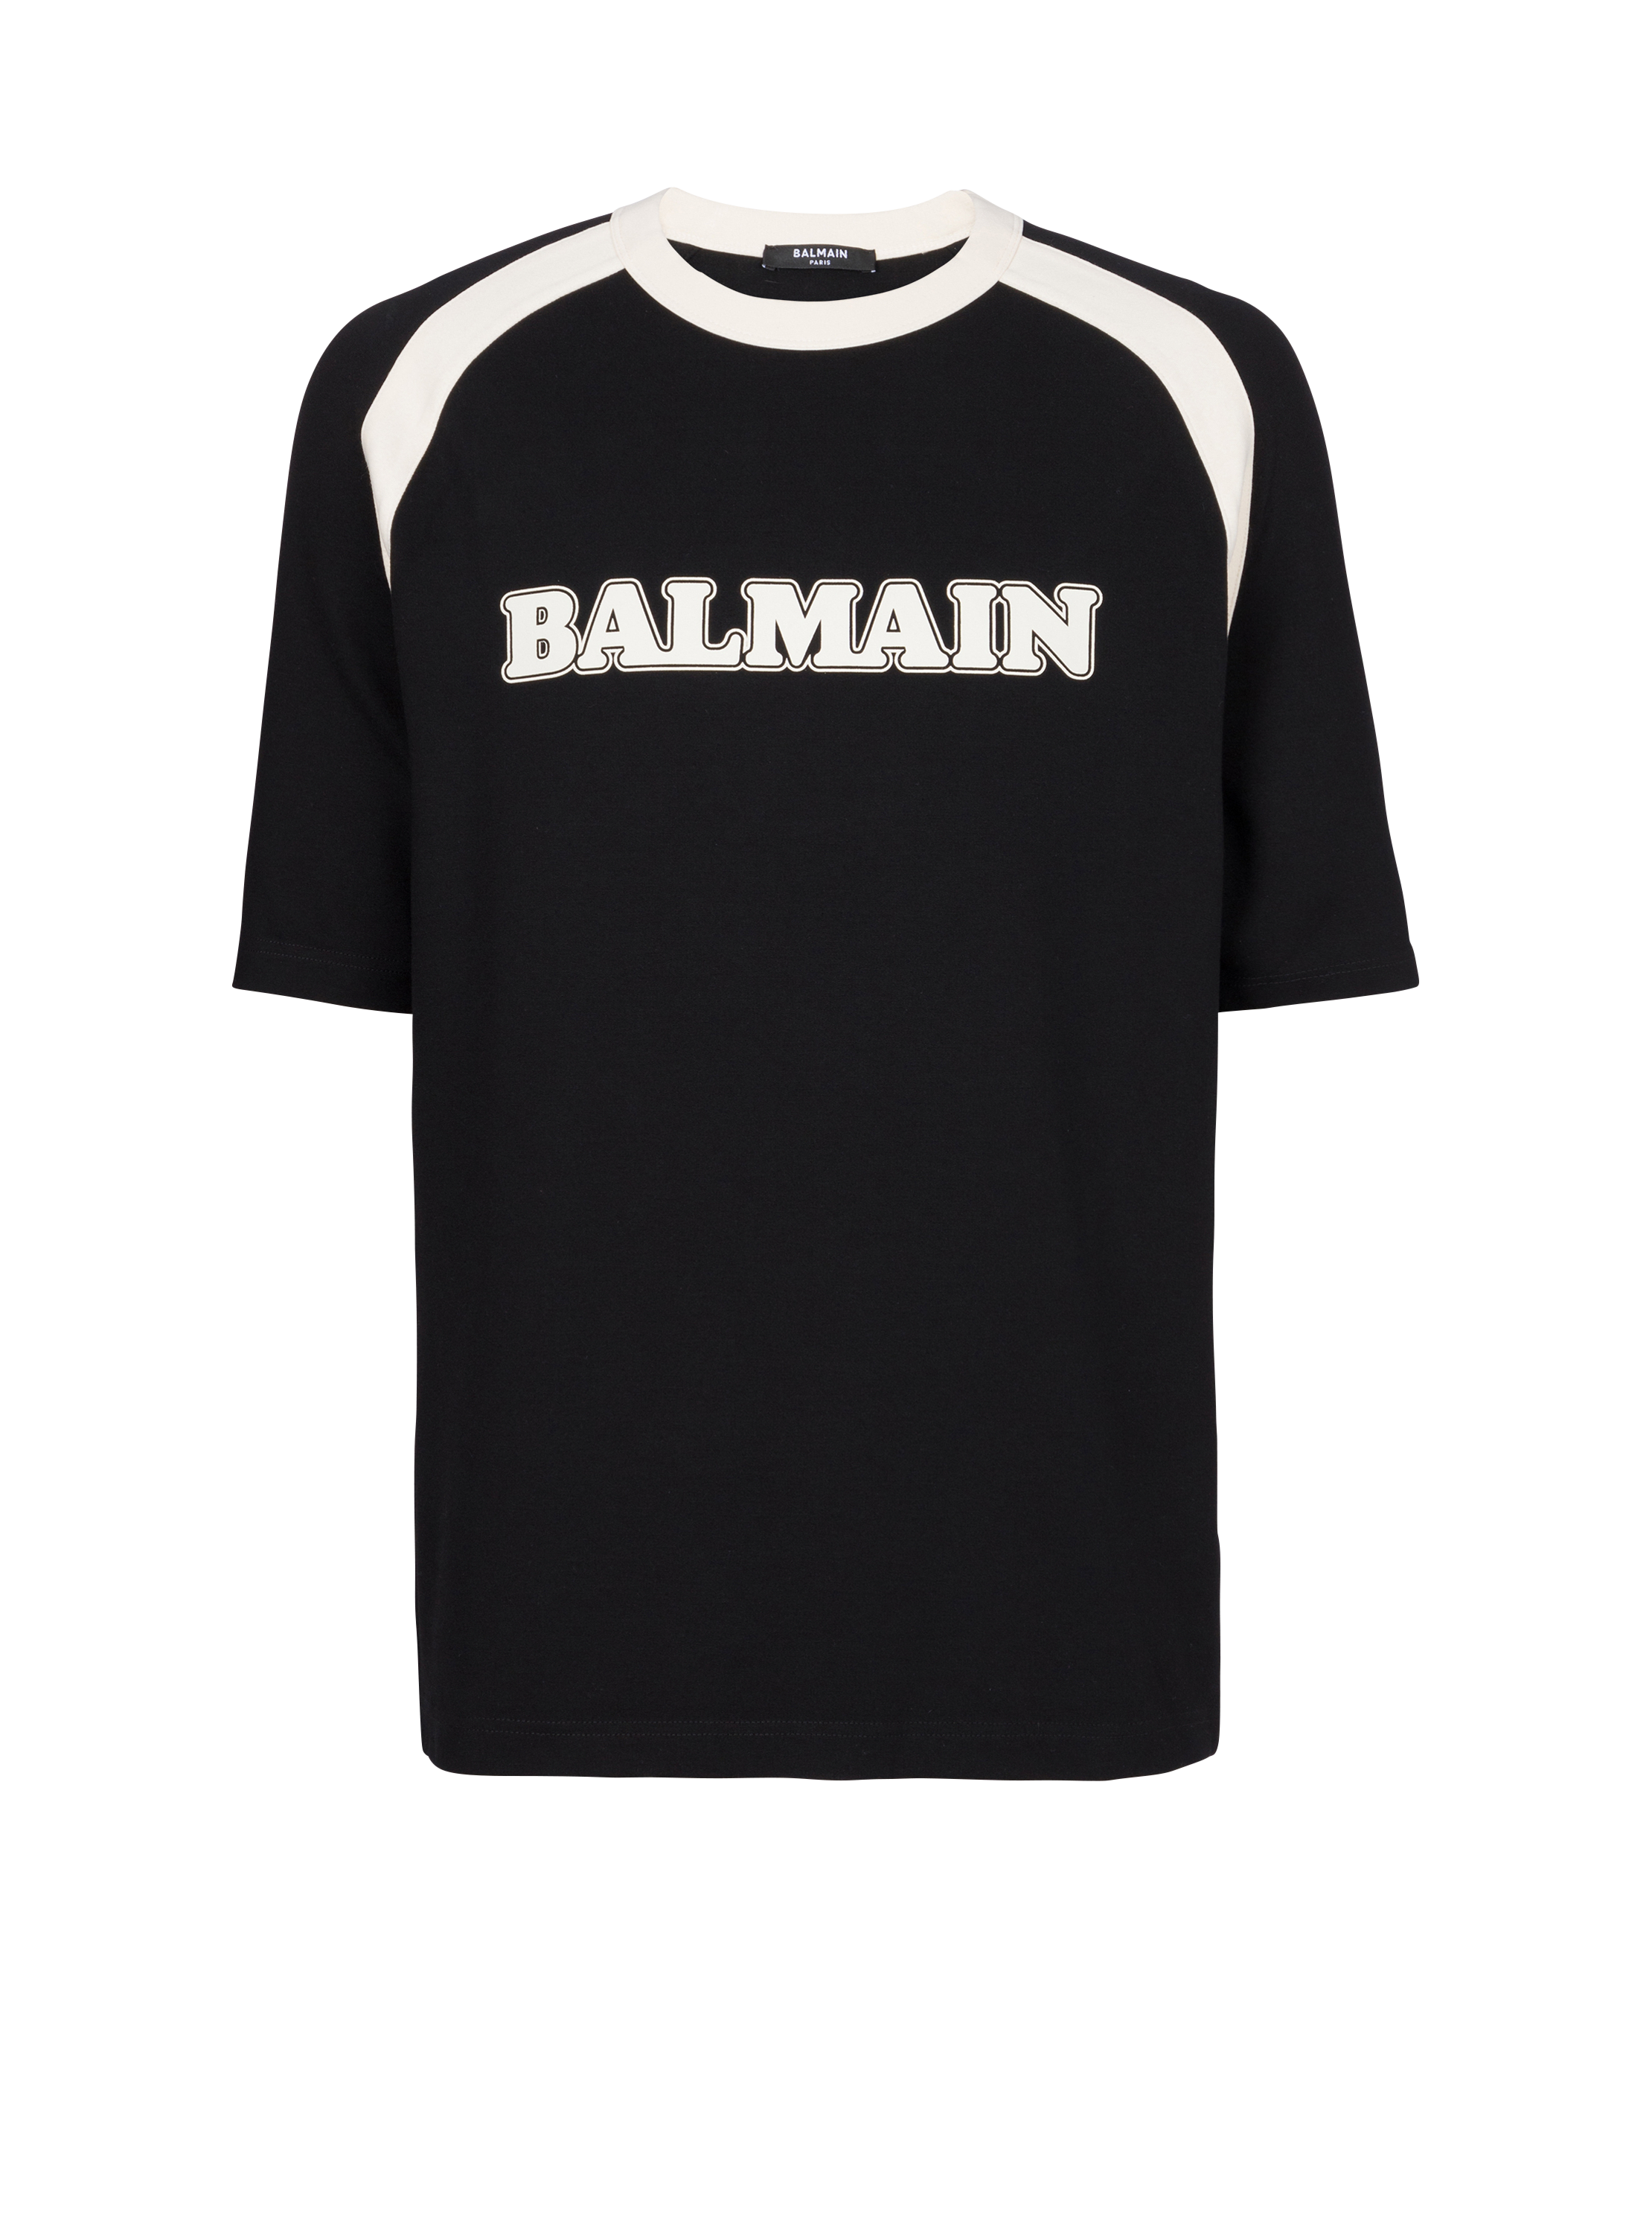 Balmain retro T-shirt